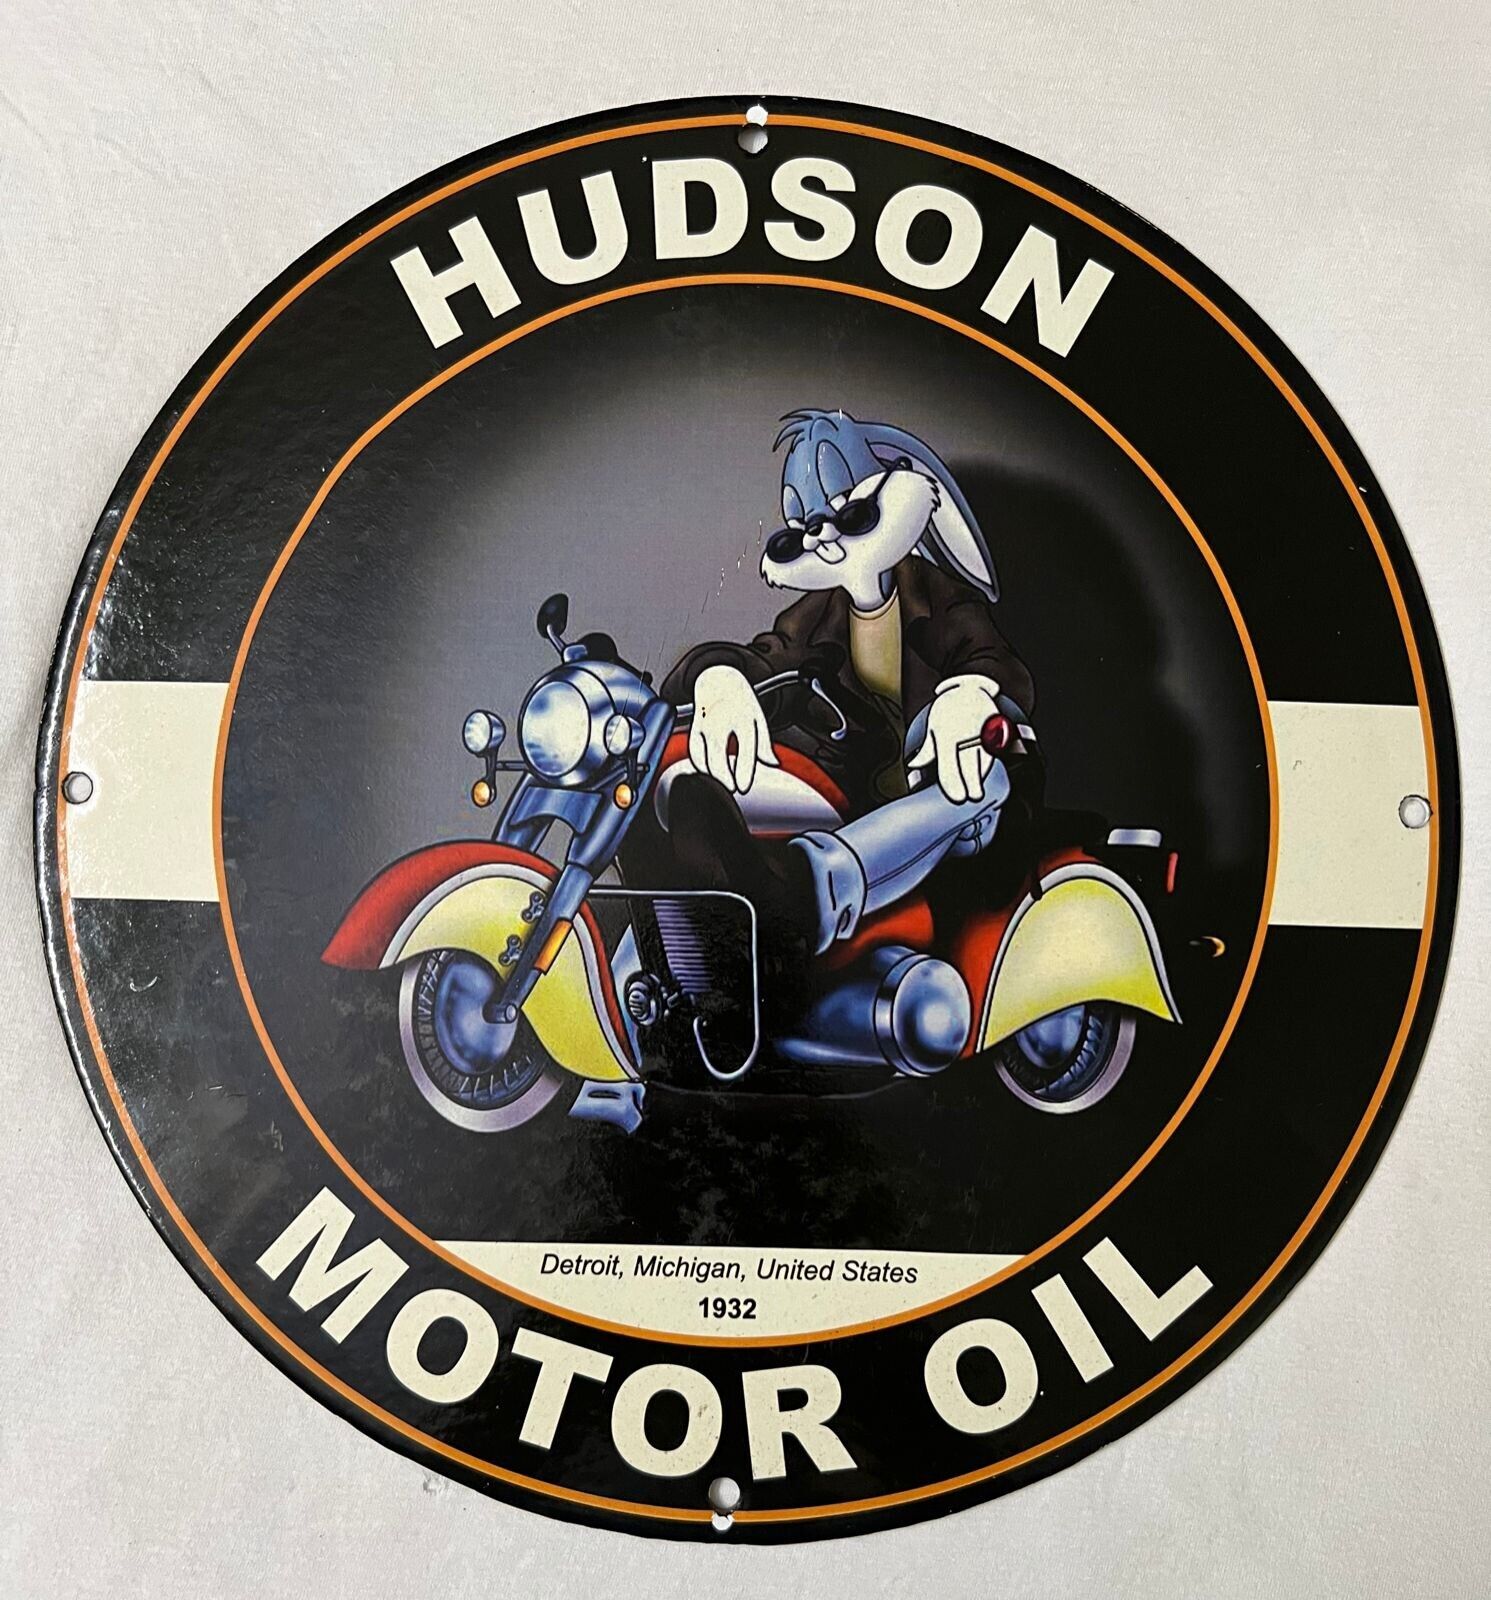 CLASSIC HUDSON MOTOR OIL & GAS PETROLEUM MOTORCYCLE GARAGE PORCELAIN ENAMEL SIGN